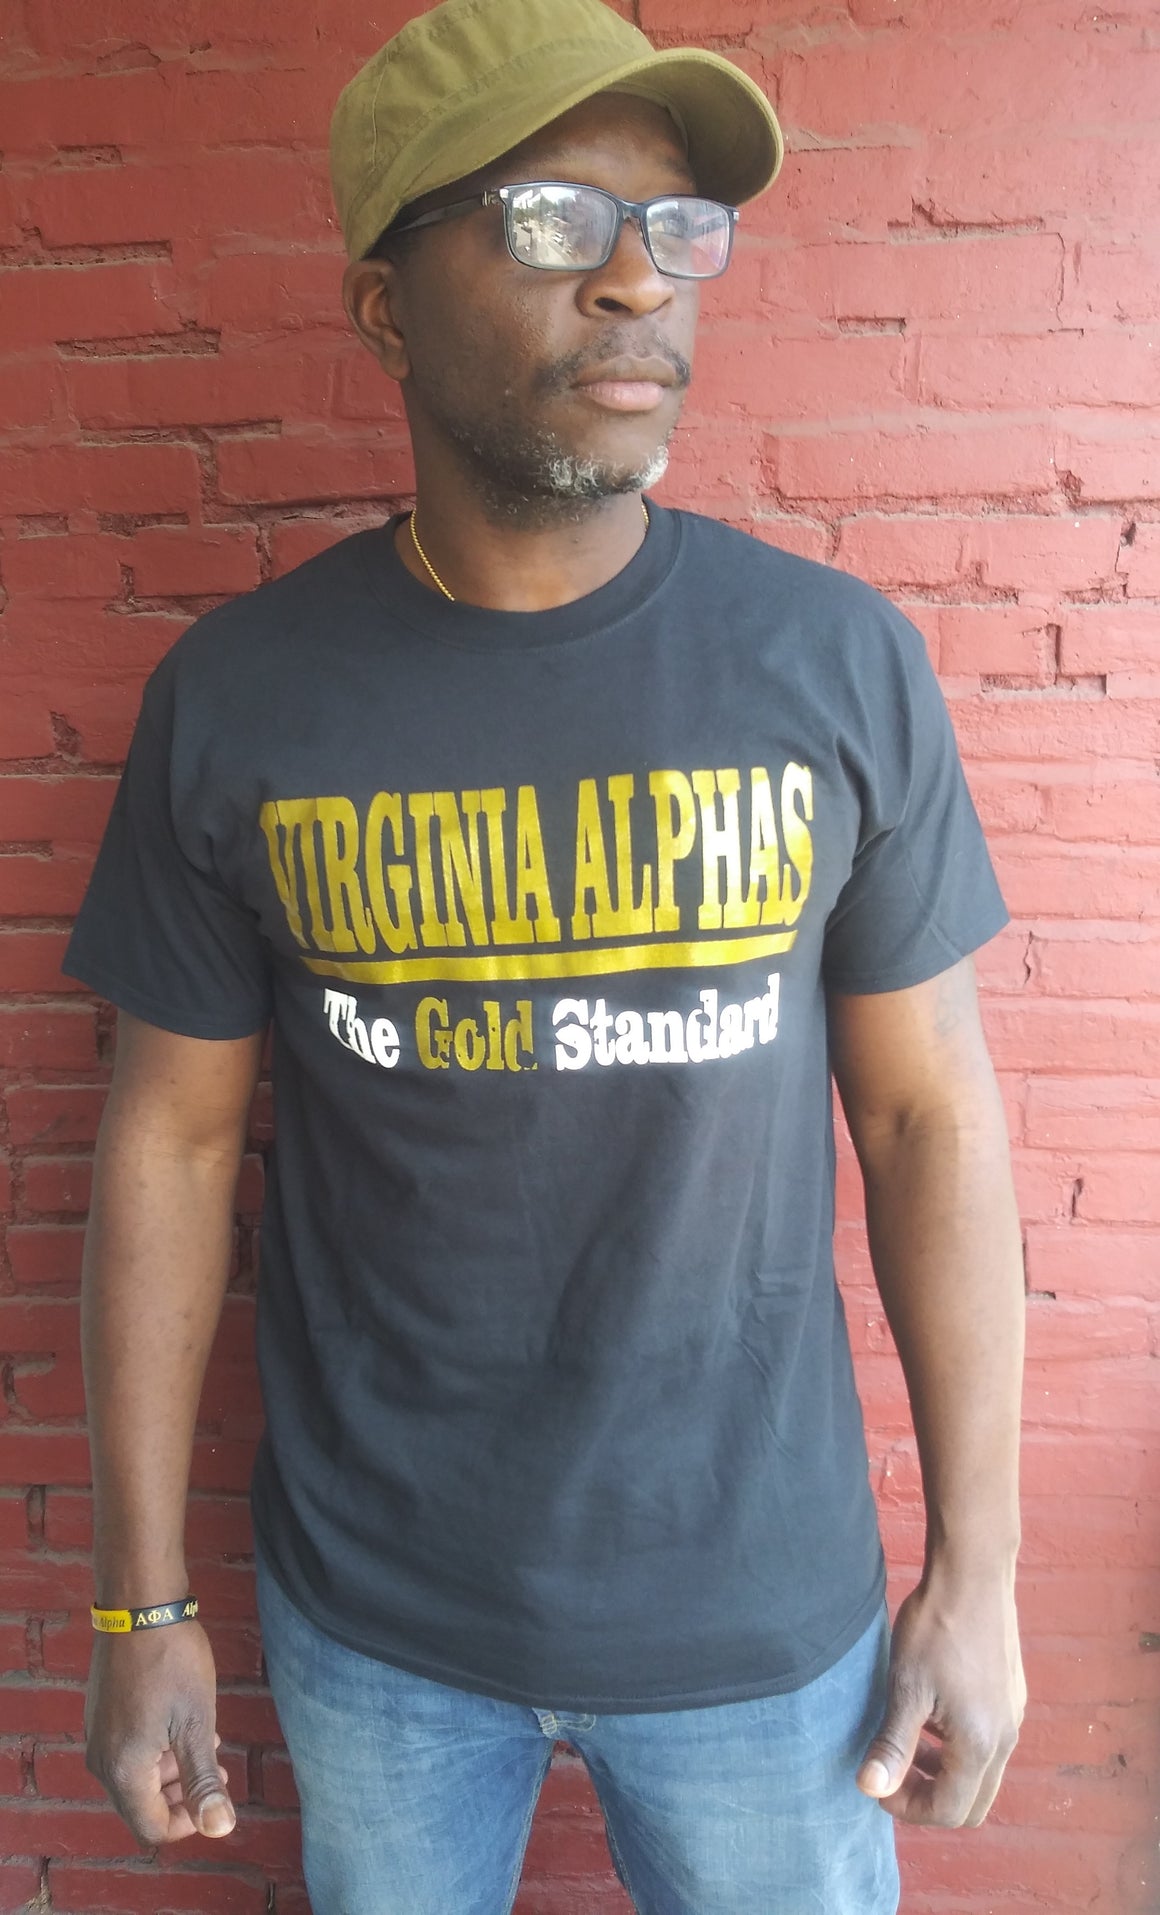 Virginia Alphas"The Gold Standard" Tee